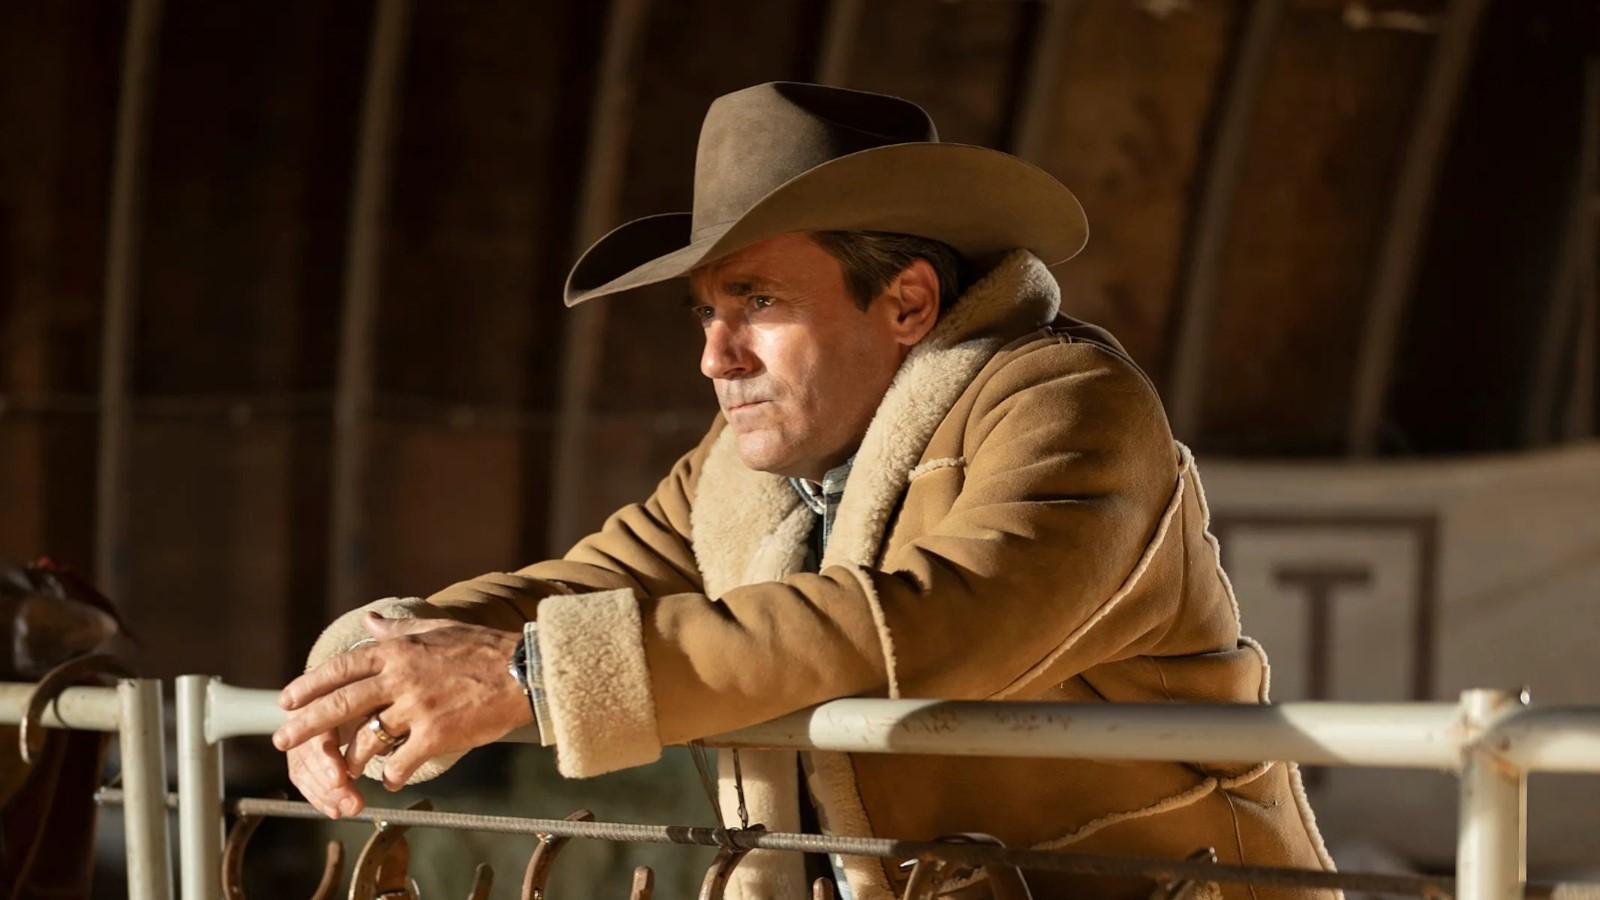 Jon Hamm as Roy Tillman in Fargo Season 5, wearing a hat and leaning on a railing